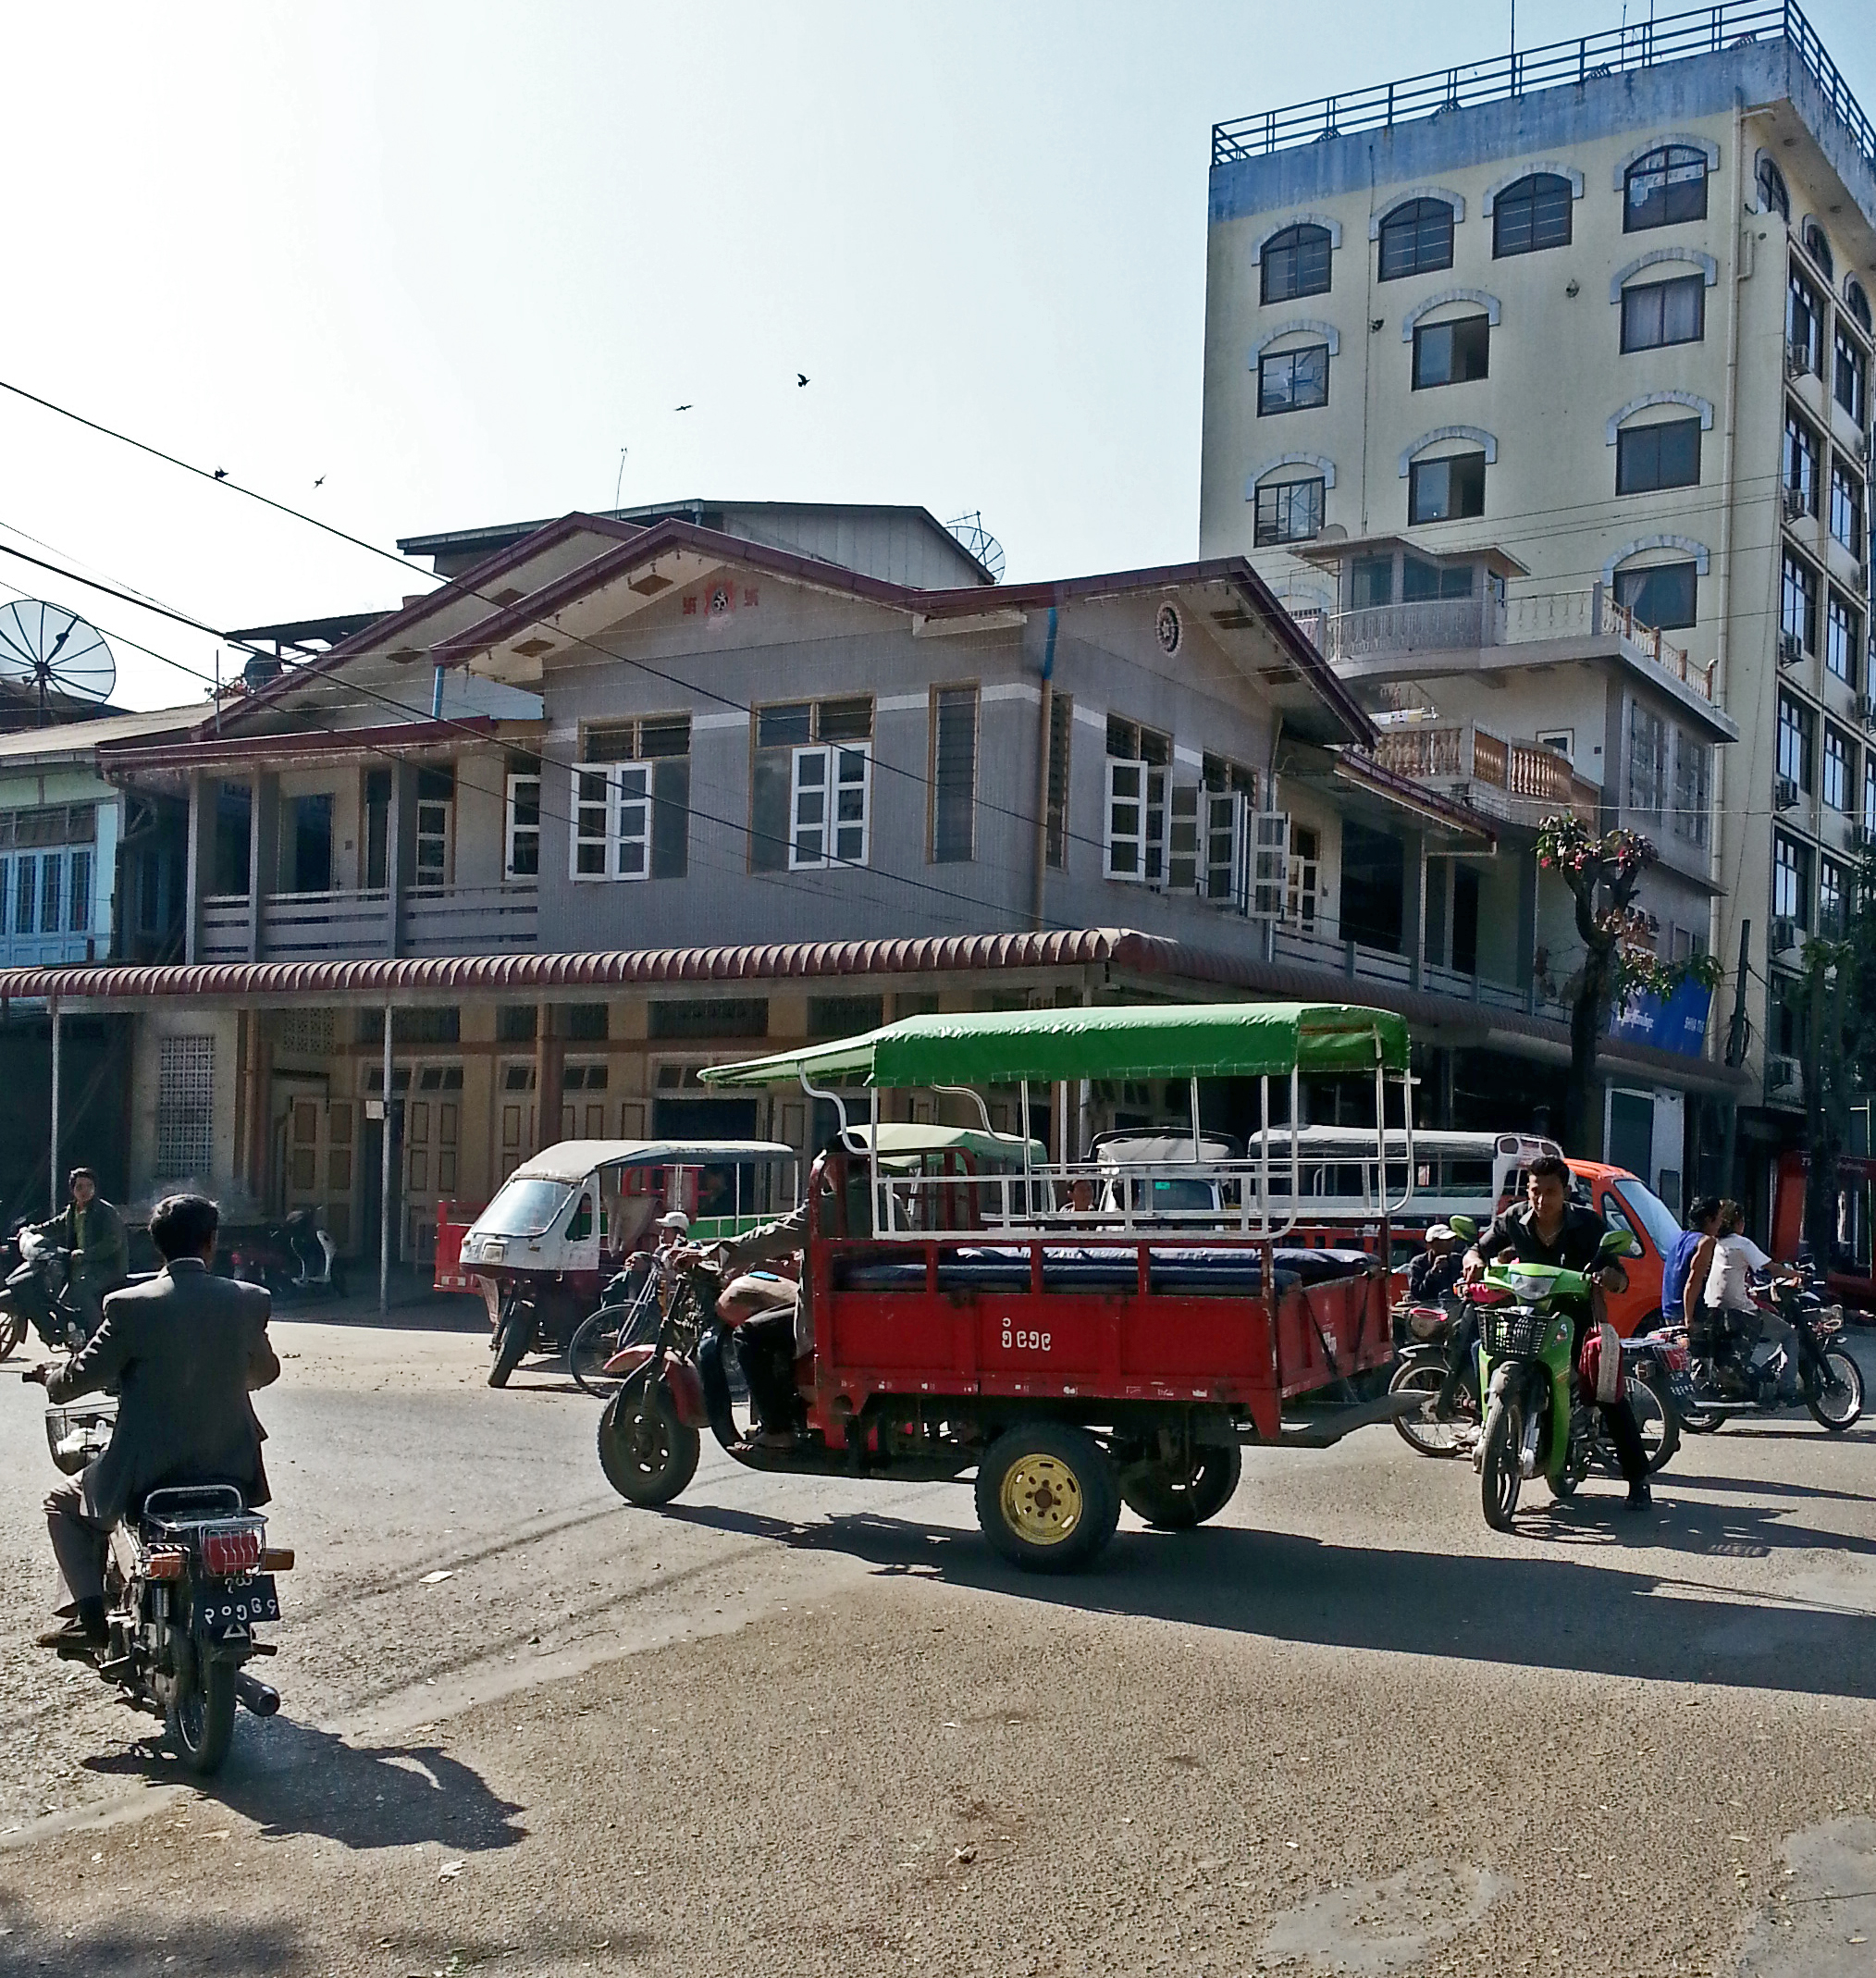 Tuktuk and motor bikes